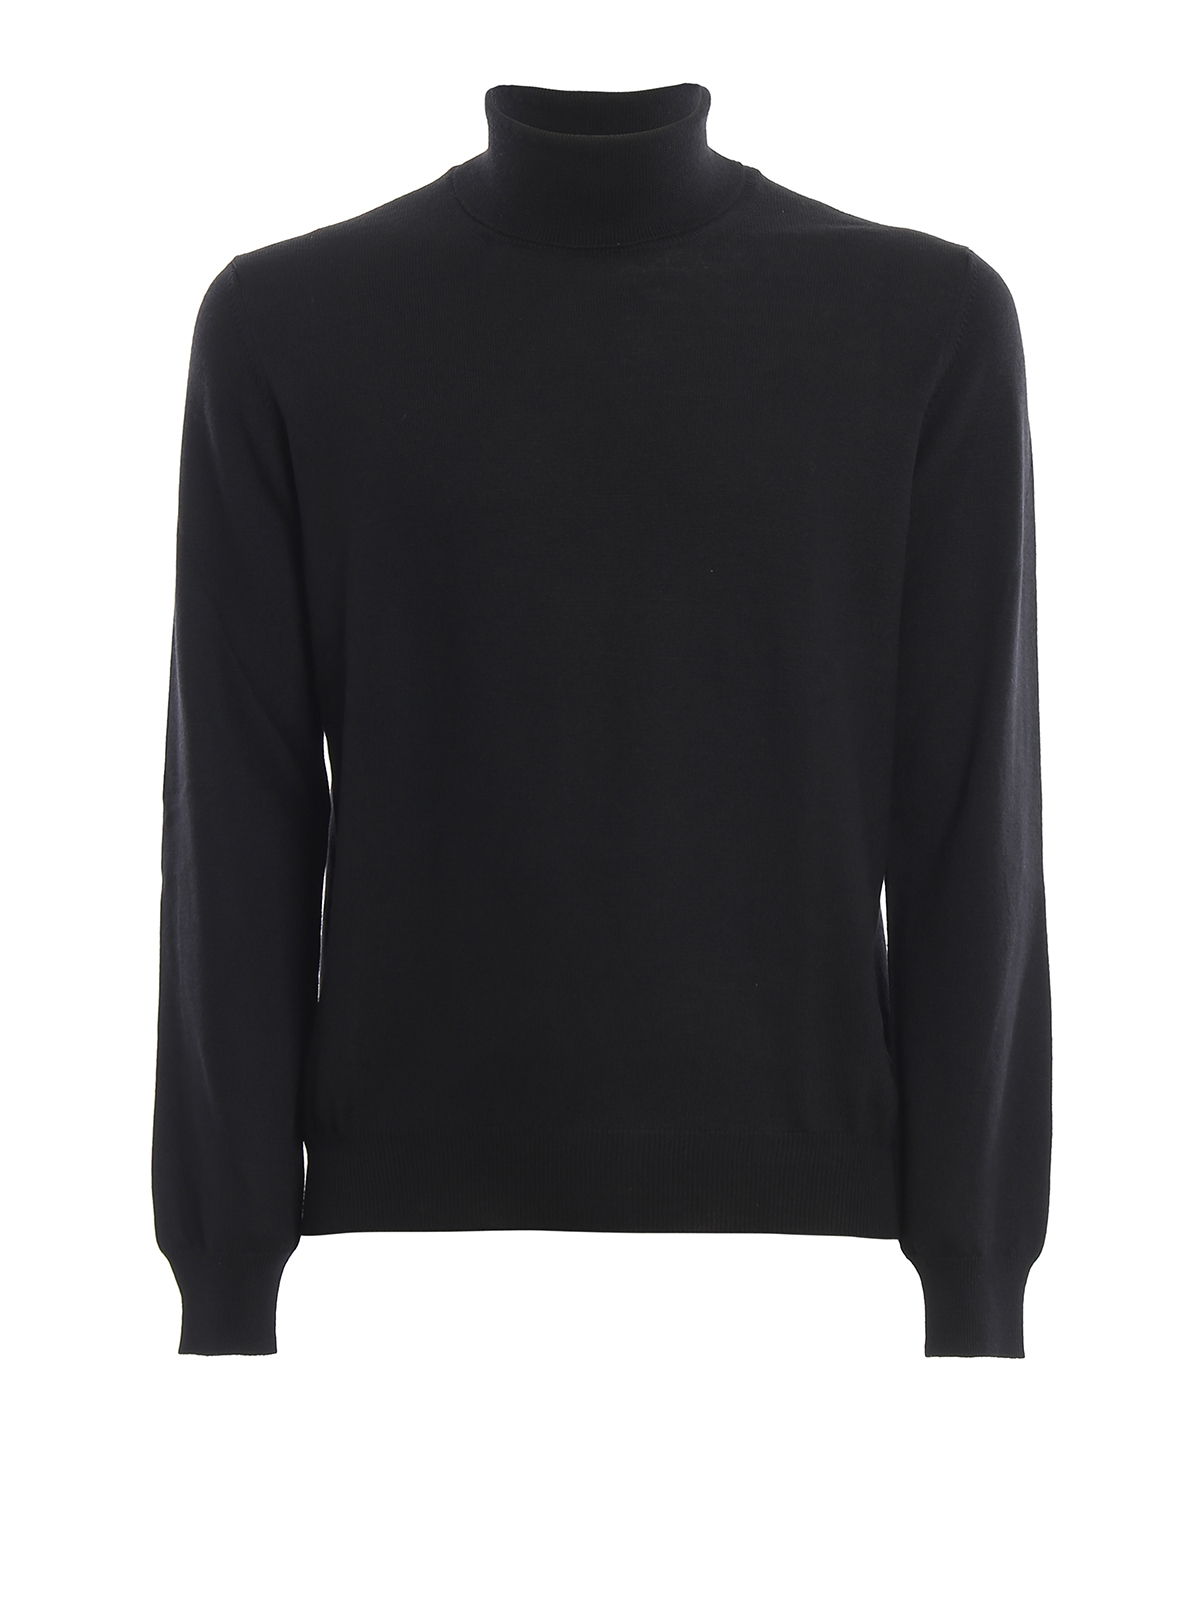 Paolo Fiorillo Black Pure Wool Turtleneck Sweater